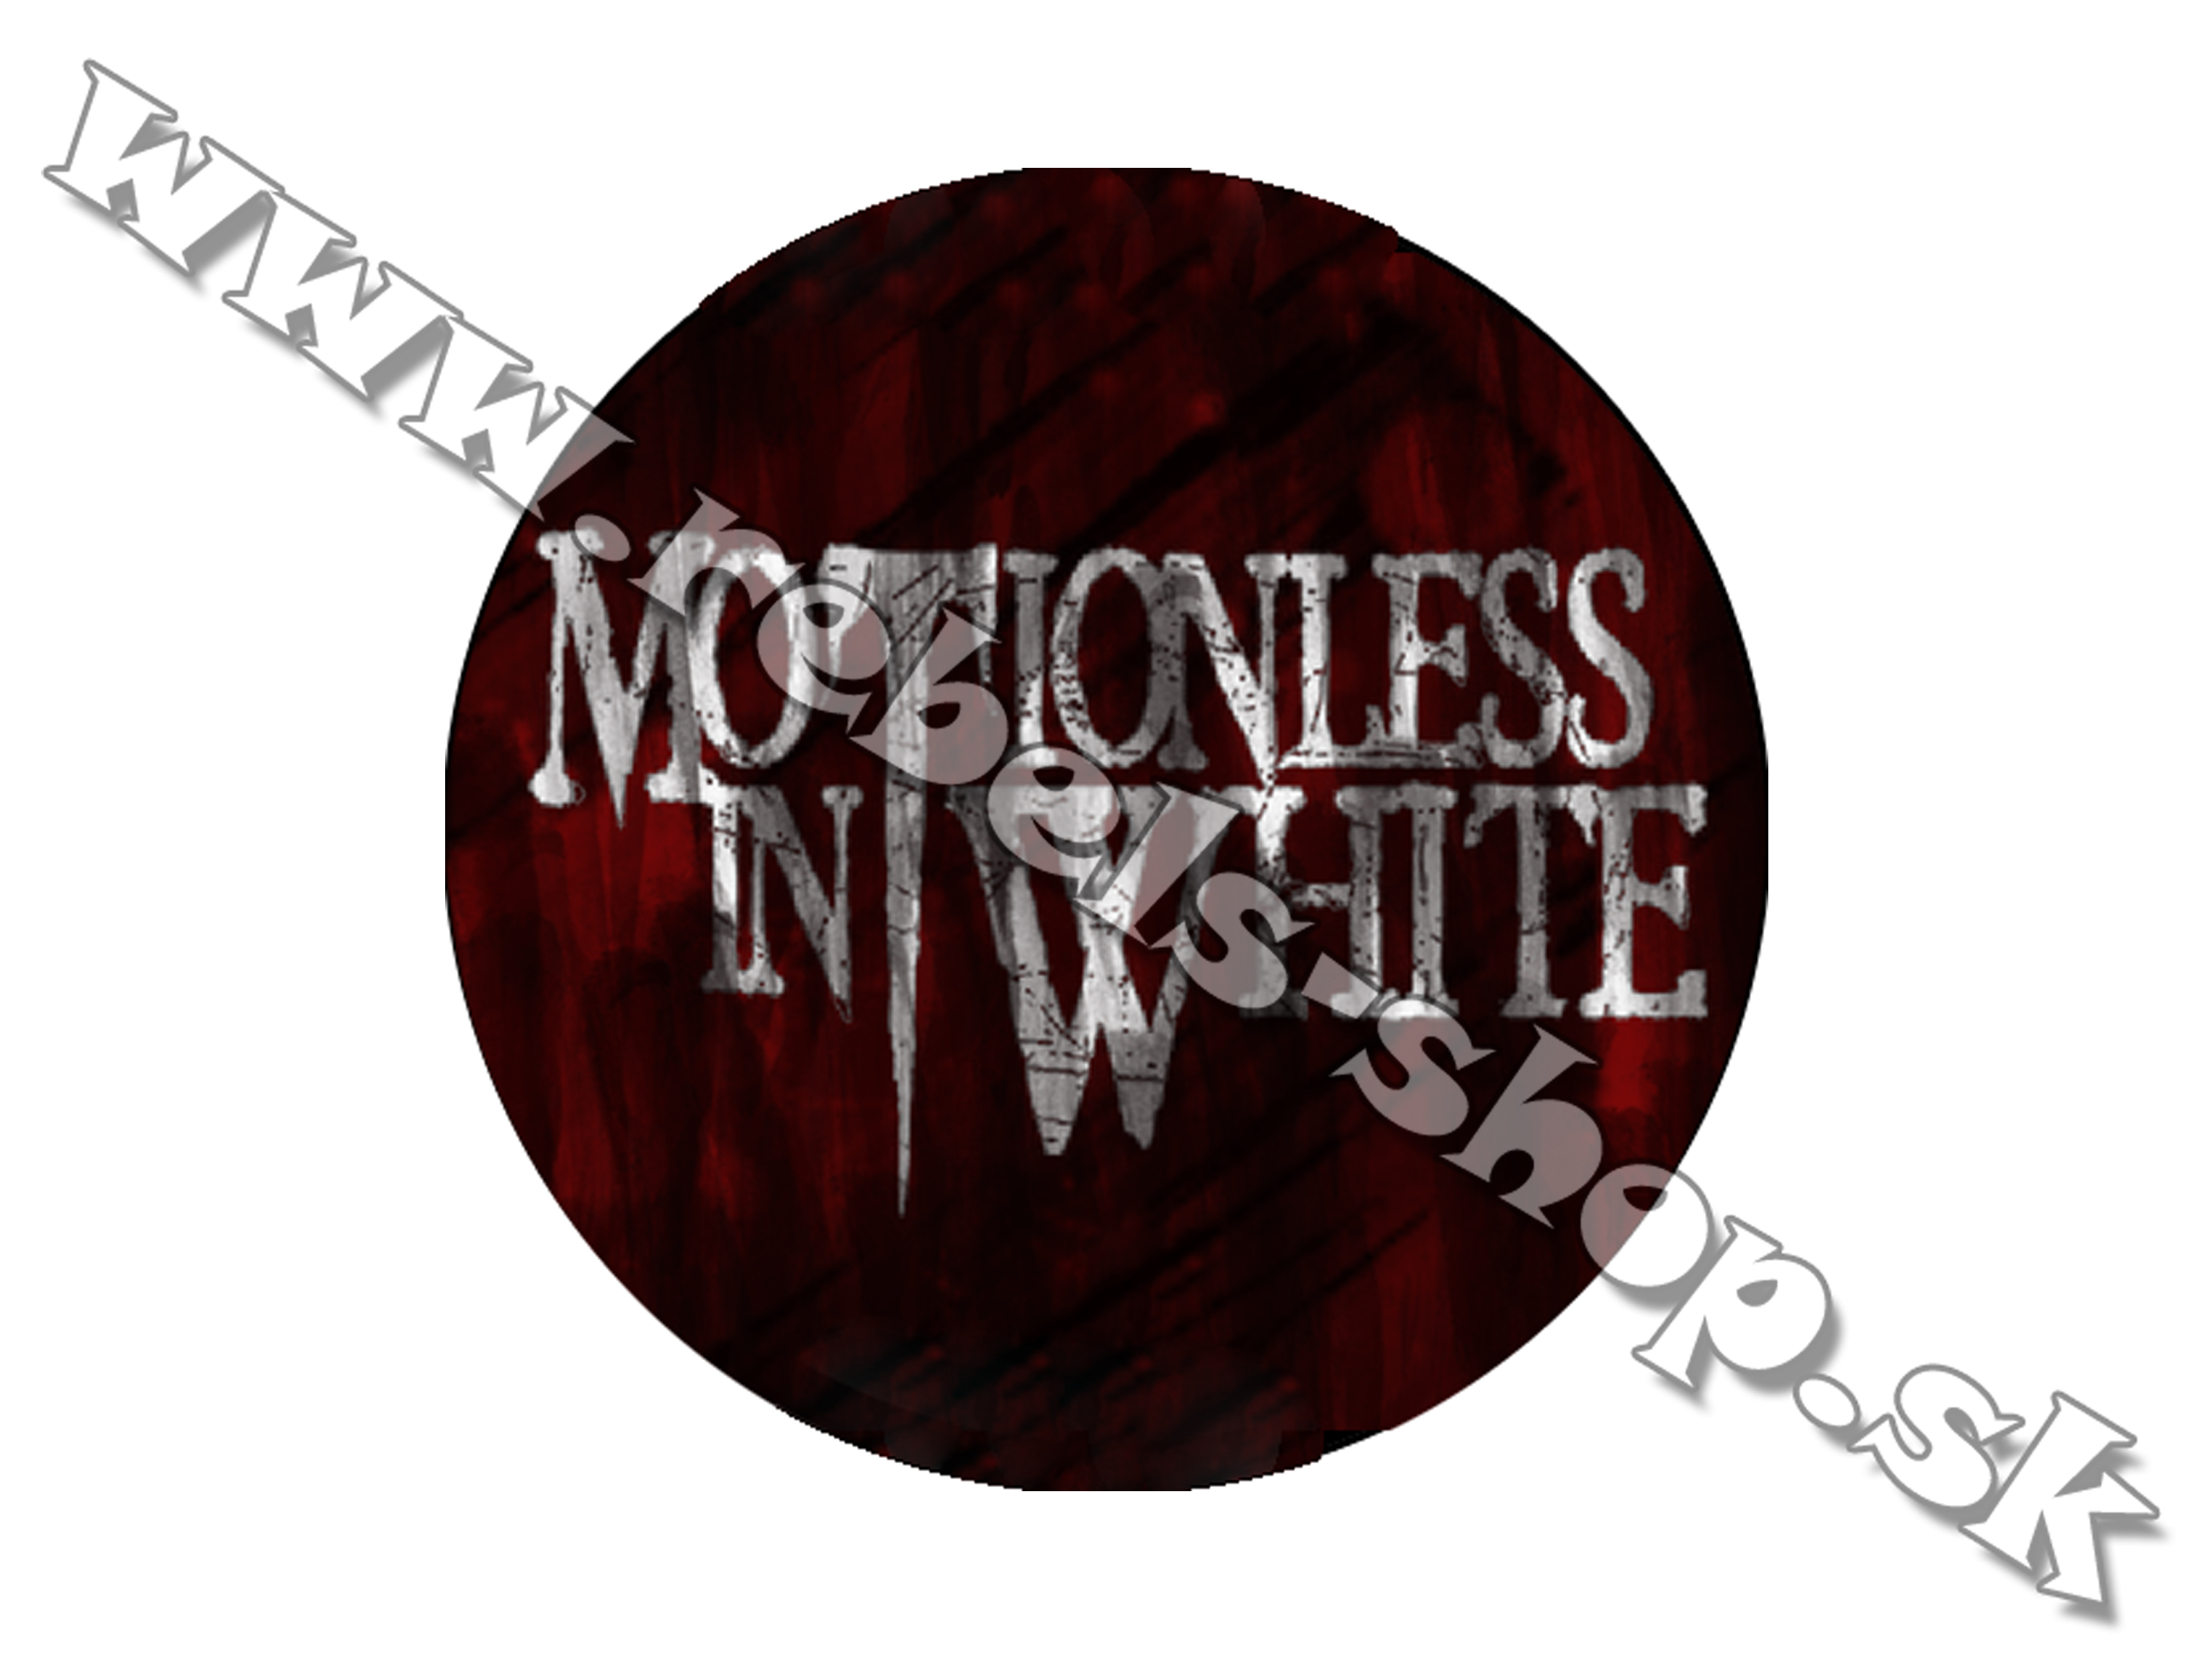 Odznak "Motionless in White"